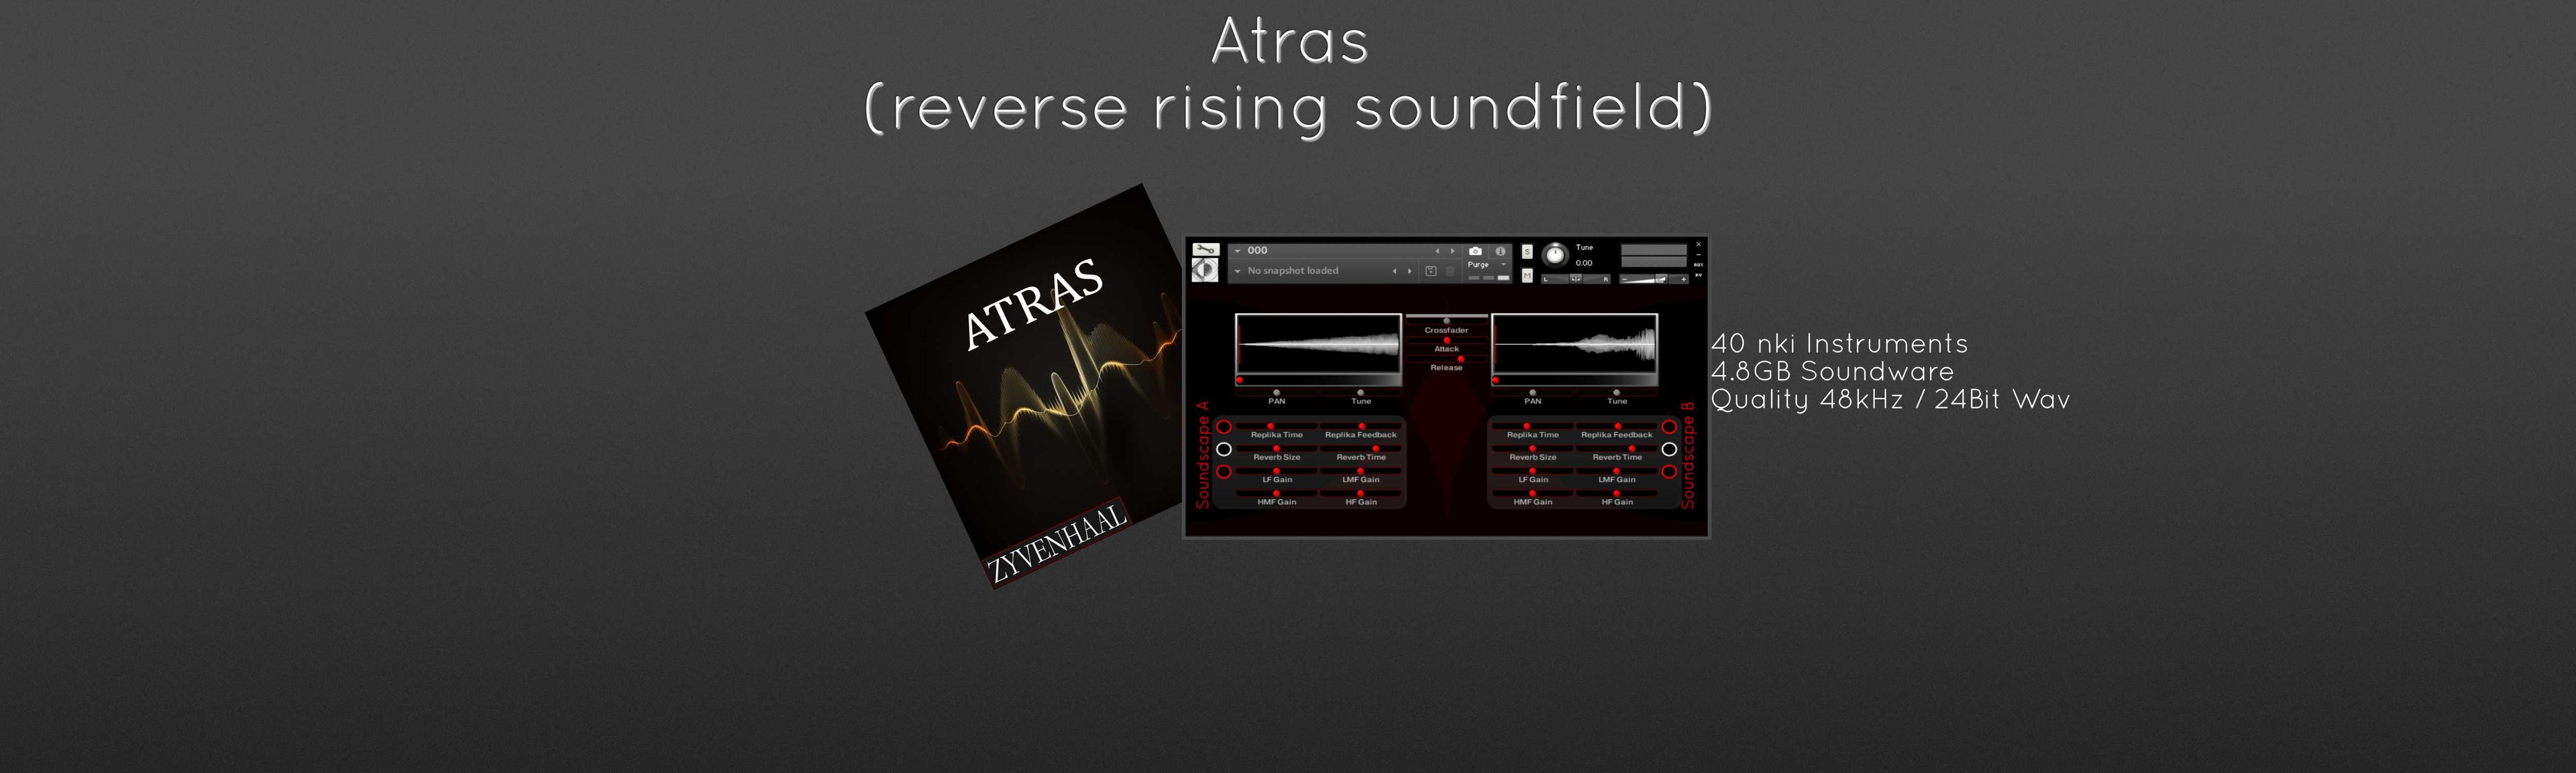 Atras-reverse-rising-soundfield-kontakt-sample-libraries